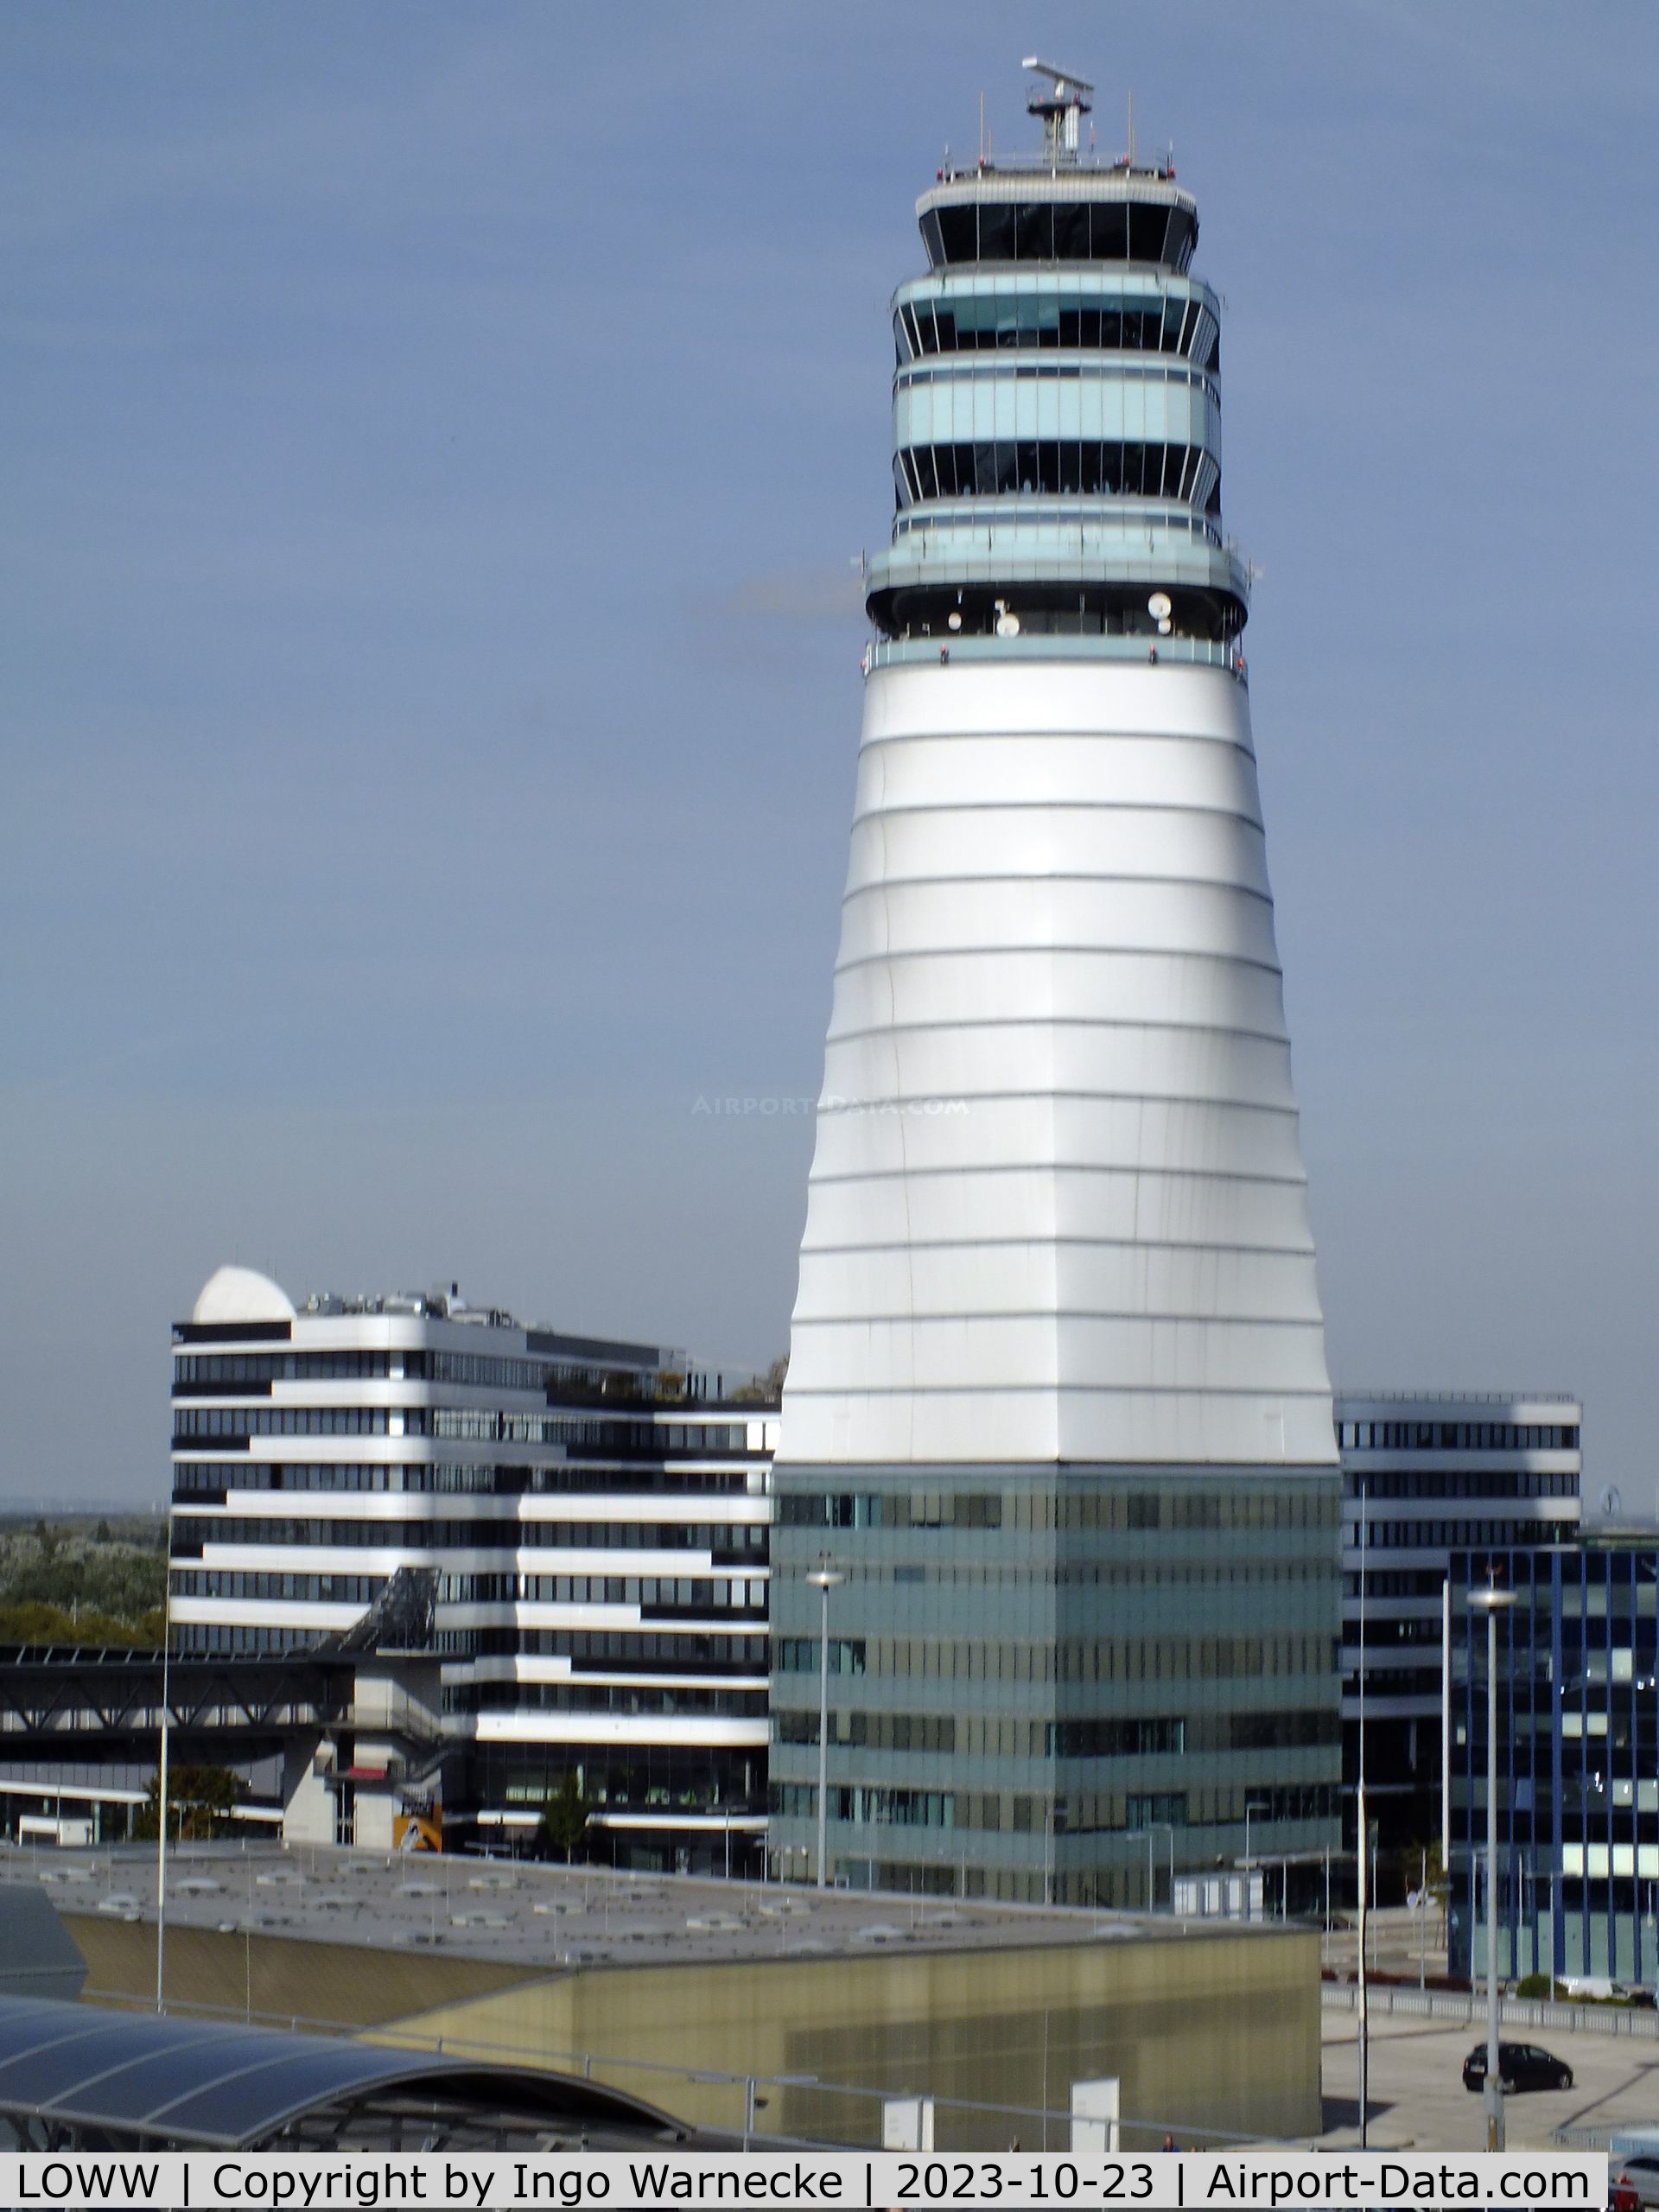 Vienna International Airport, Vienna Austria (LOWW) - airside view of the tower at Wien airport